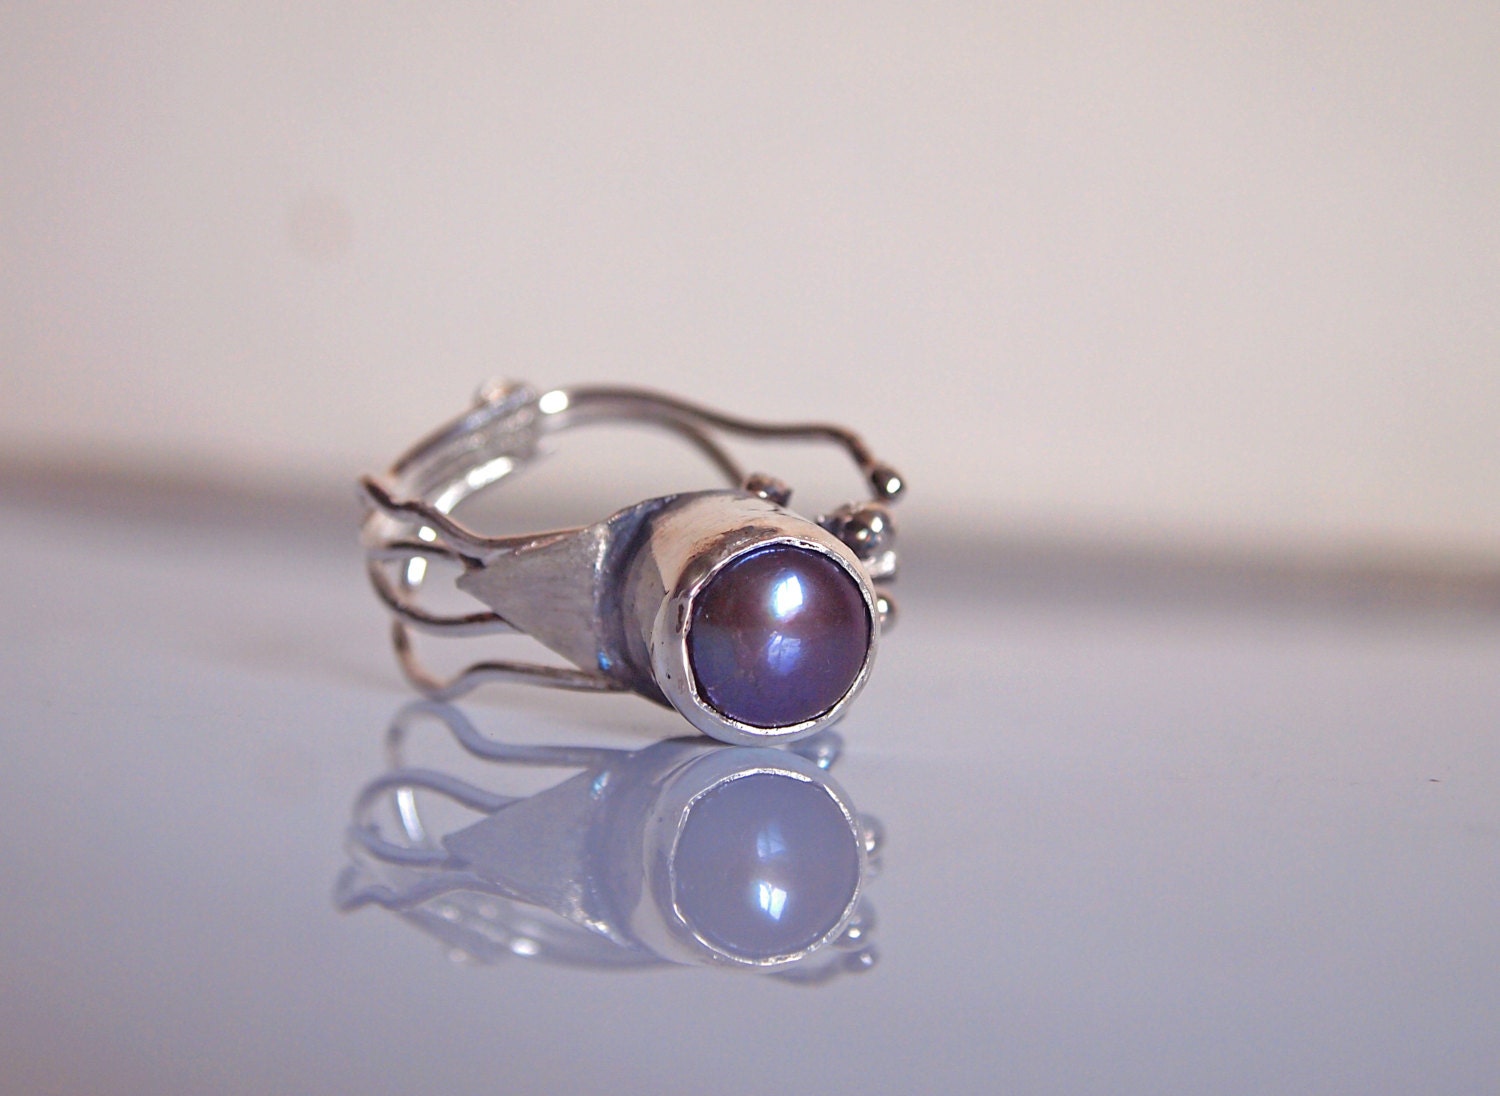 Black Purple Pearl Ring - 925 in Silver - Modern Art Jewelry - Adjustable - Hands Collection- Ready to Ship - serpilguneysu